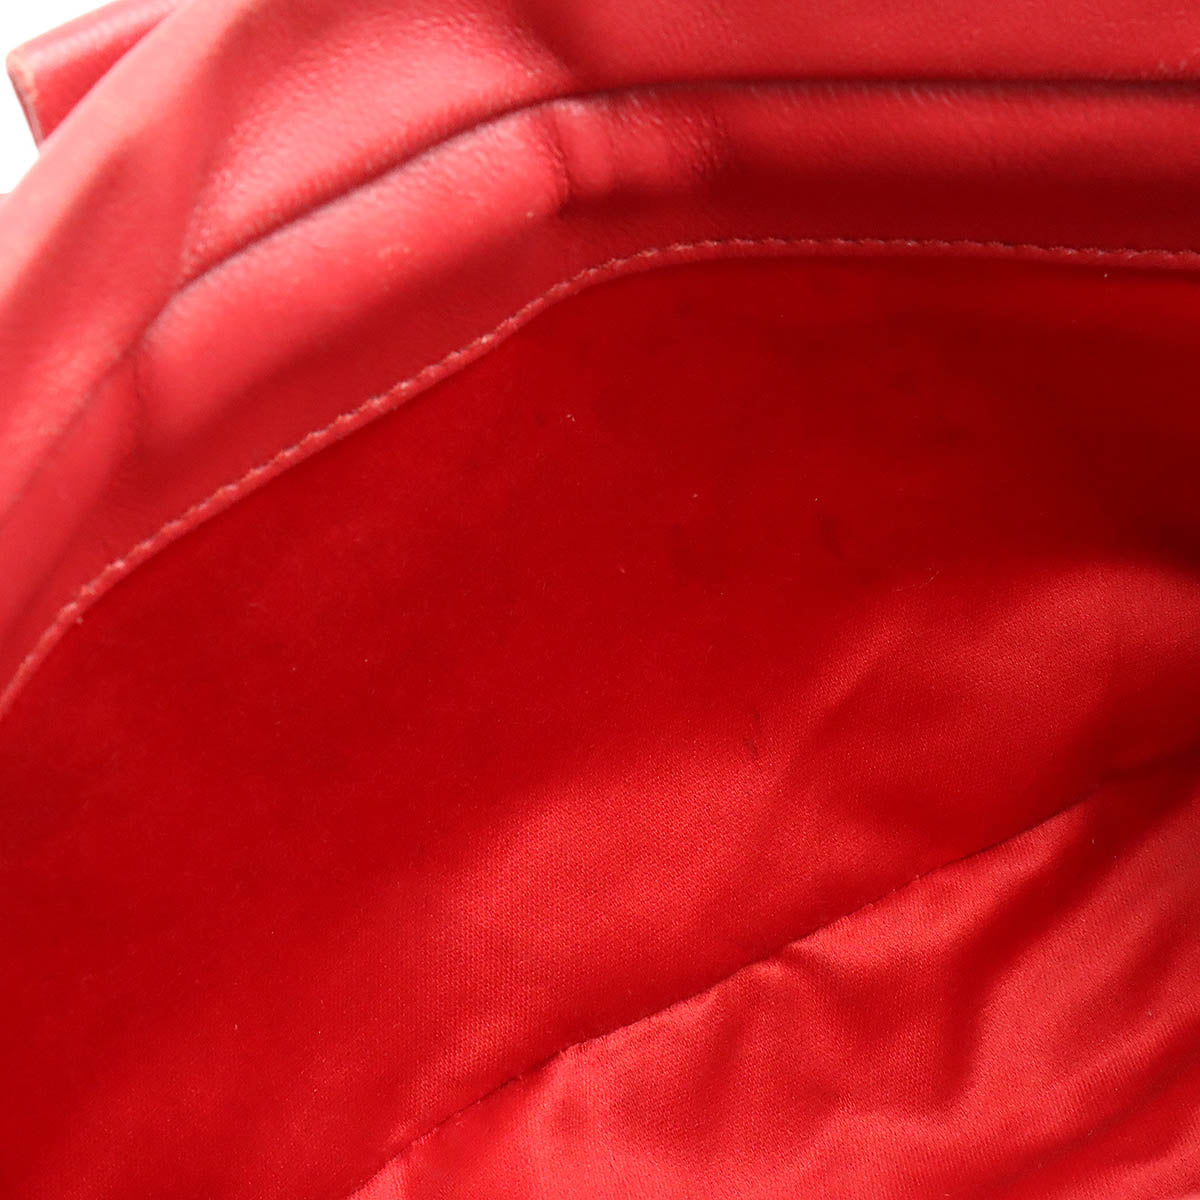 Miu Miu Mo Mo Mo Mo Mo Mo Mo Mo Materaxe Shoulder Bag  Slipper 2WAY  Leather Red 5N1520